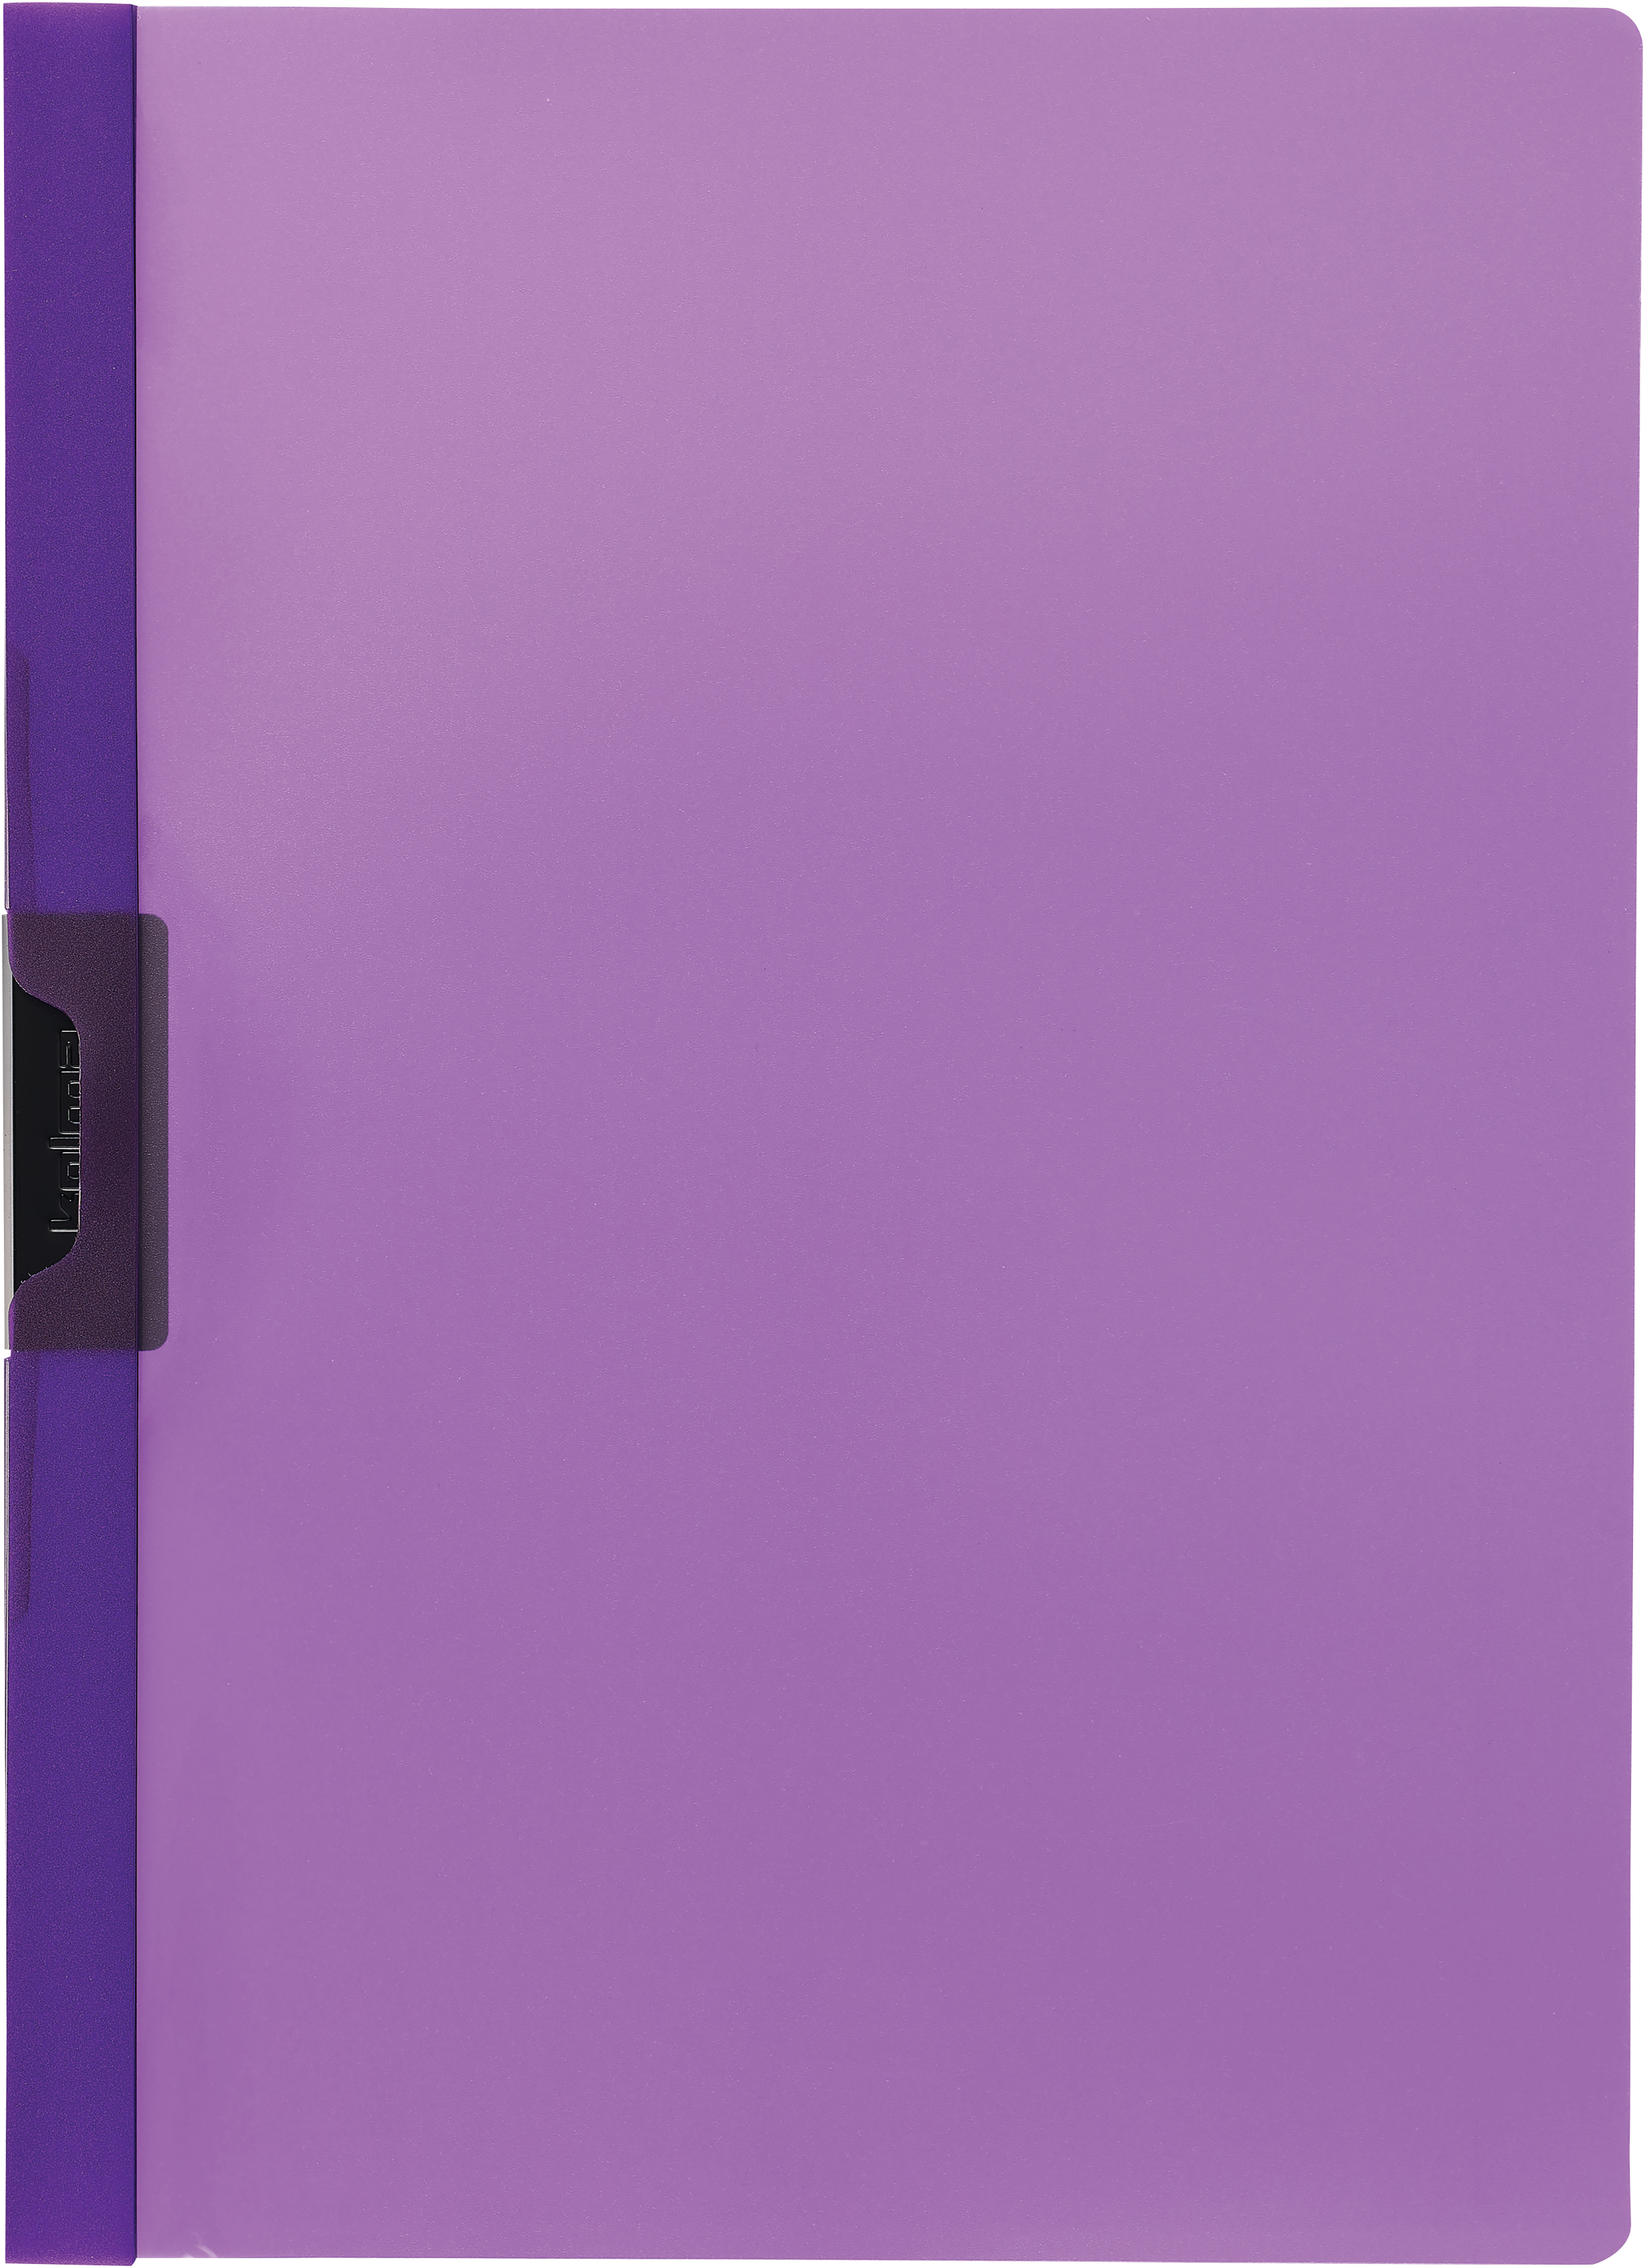 KOLMA Doss. pince PressQuick Easy A4 11.142.13 violet, jusqu'à 20 flls.